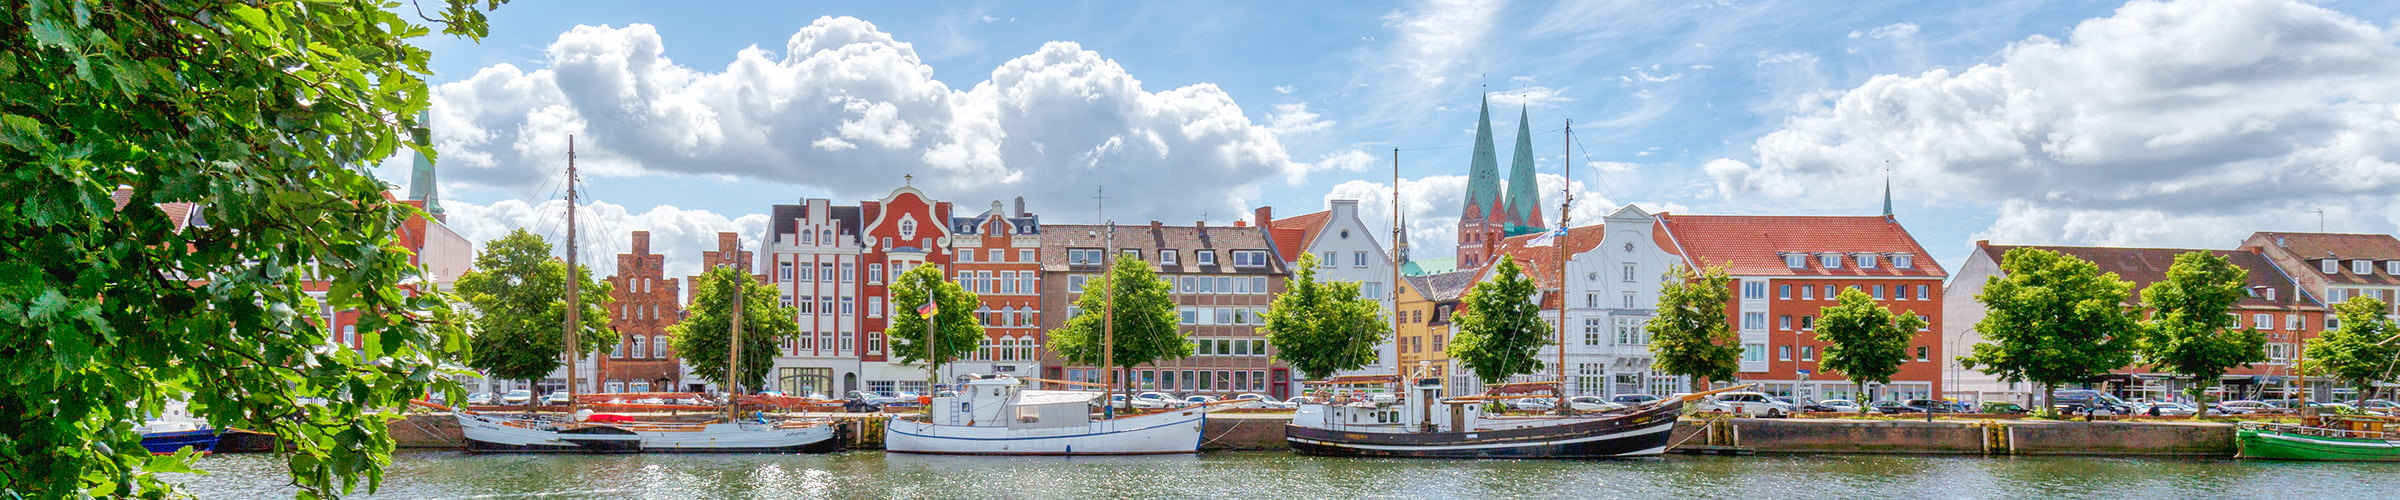 Urlaub Lübeck